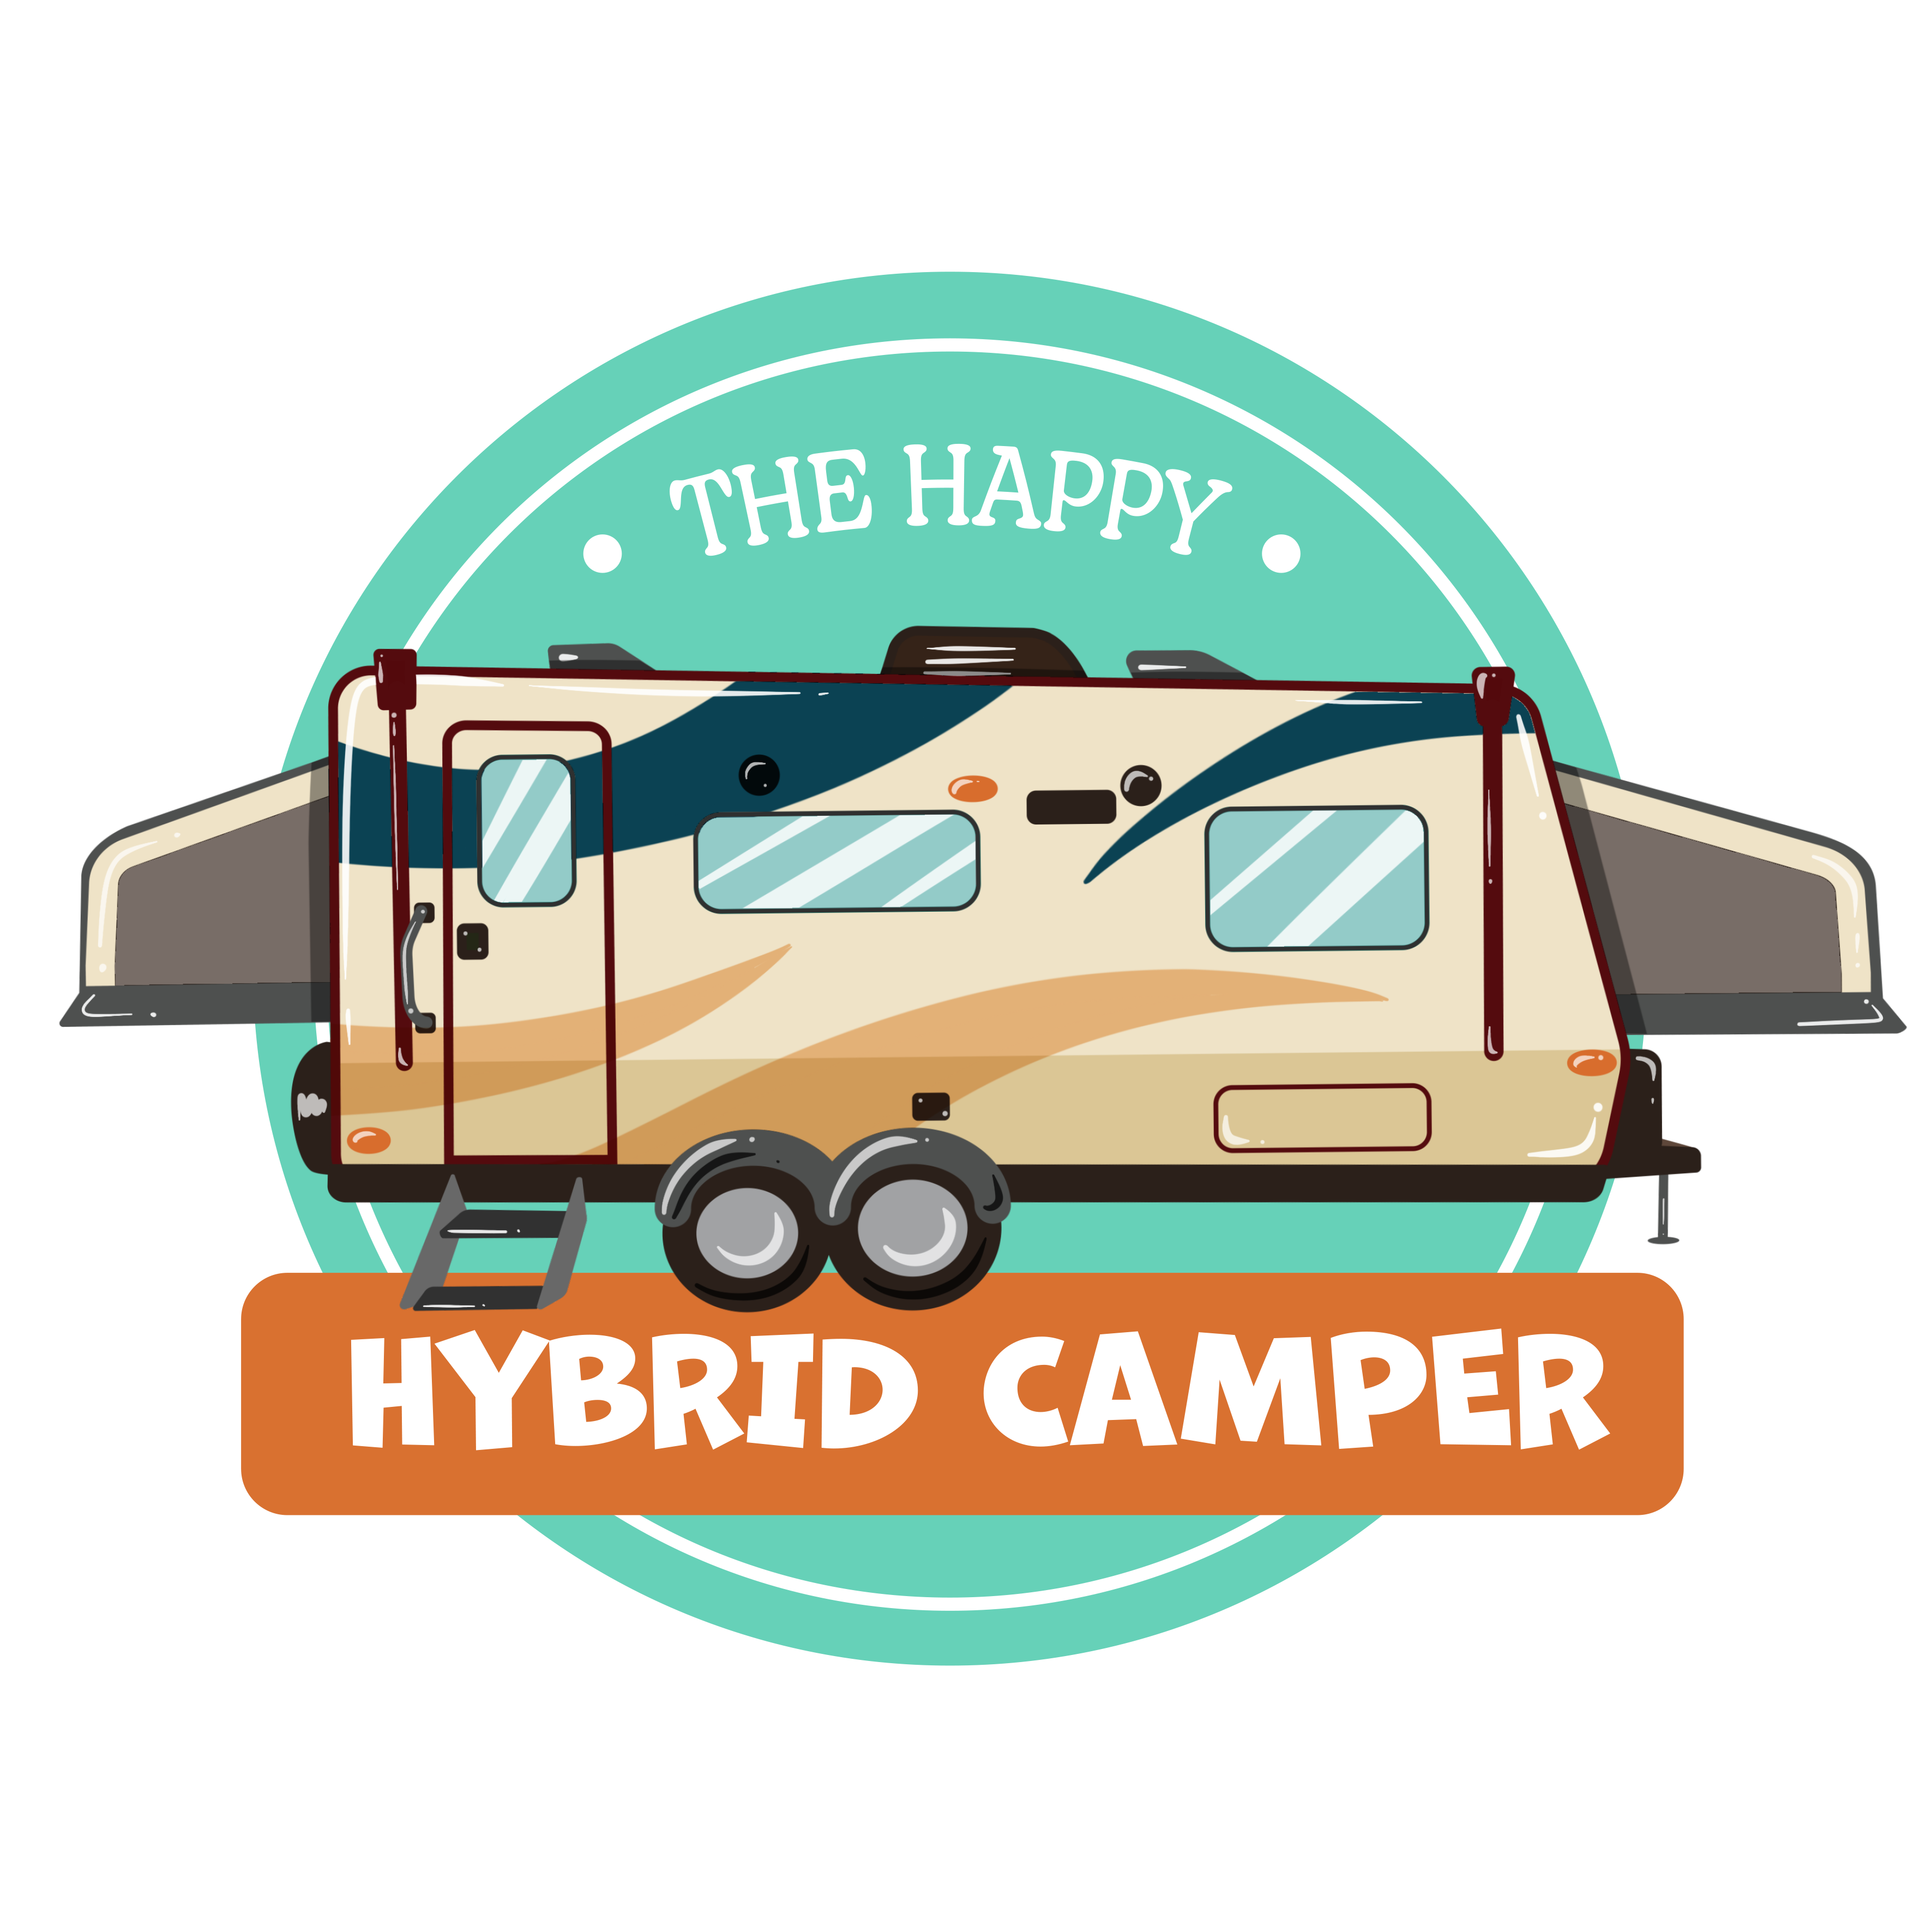 The Happy Hybrid Camper